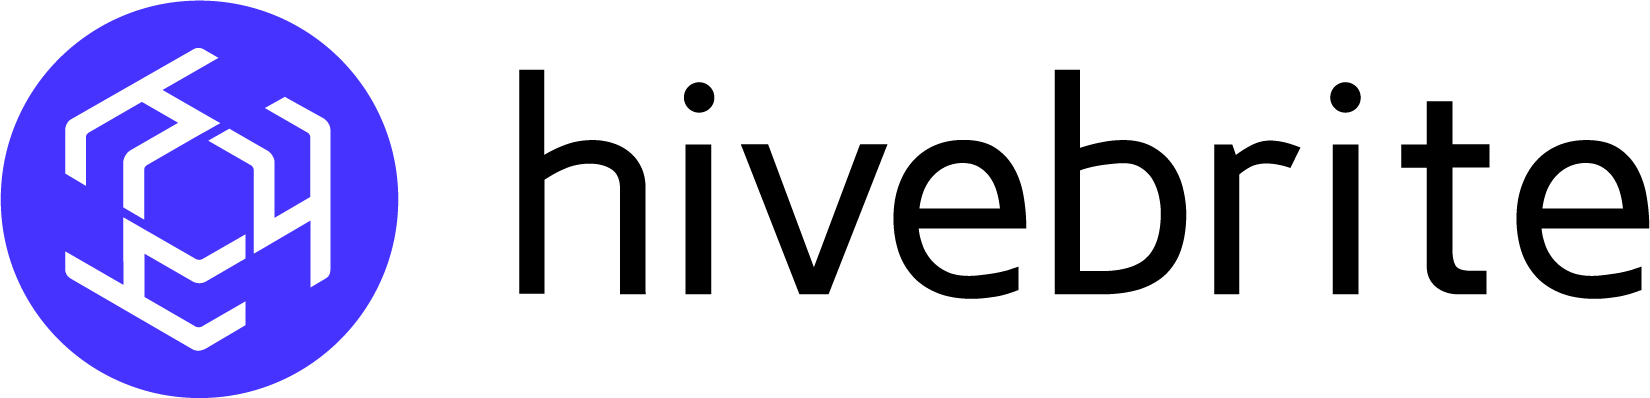 self.dev logo